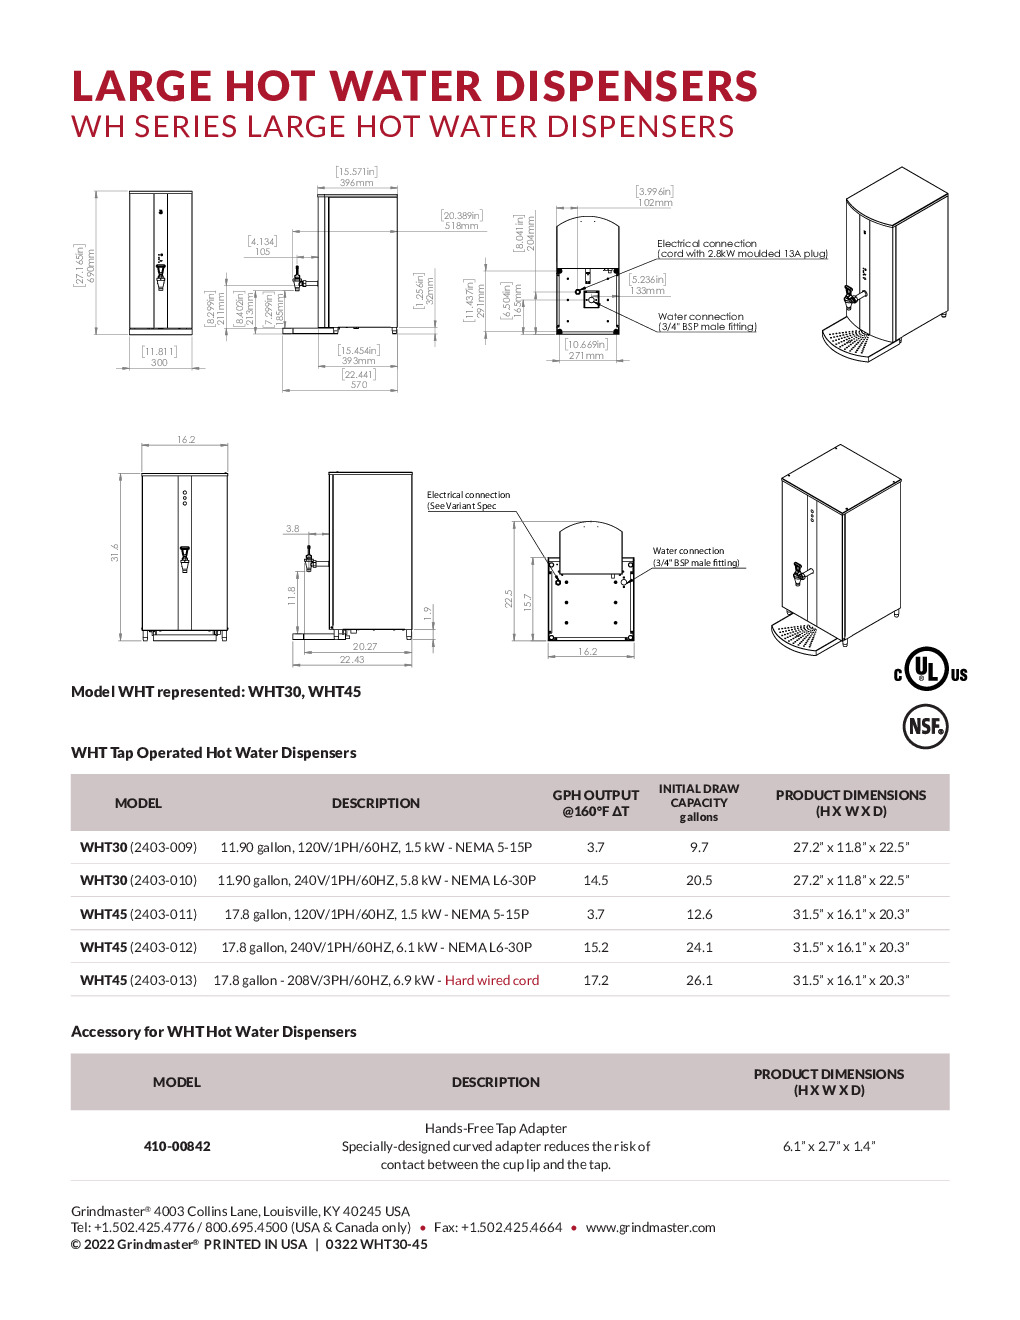 Grindmaster-UNIC-Crathco WHT45-120 Hot Water Dispenser